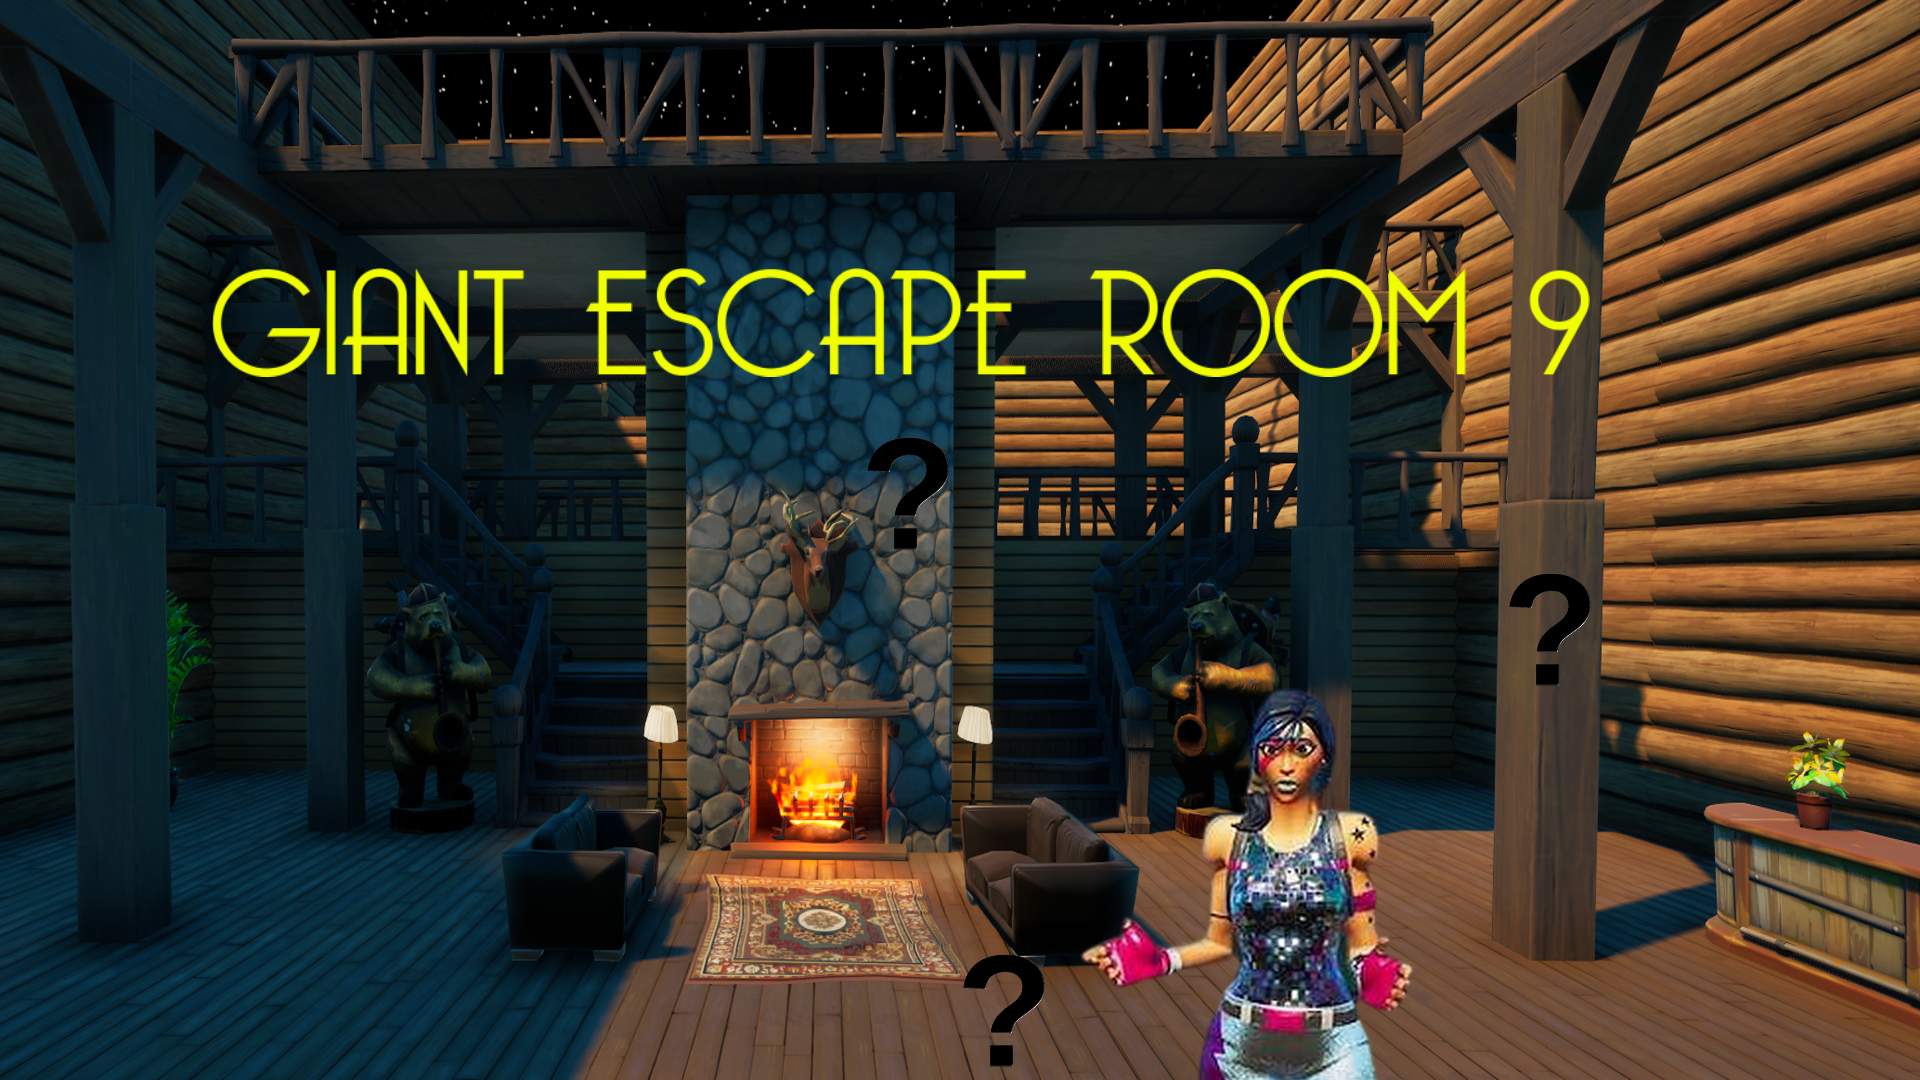 Giant Escape Room 9